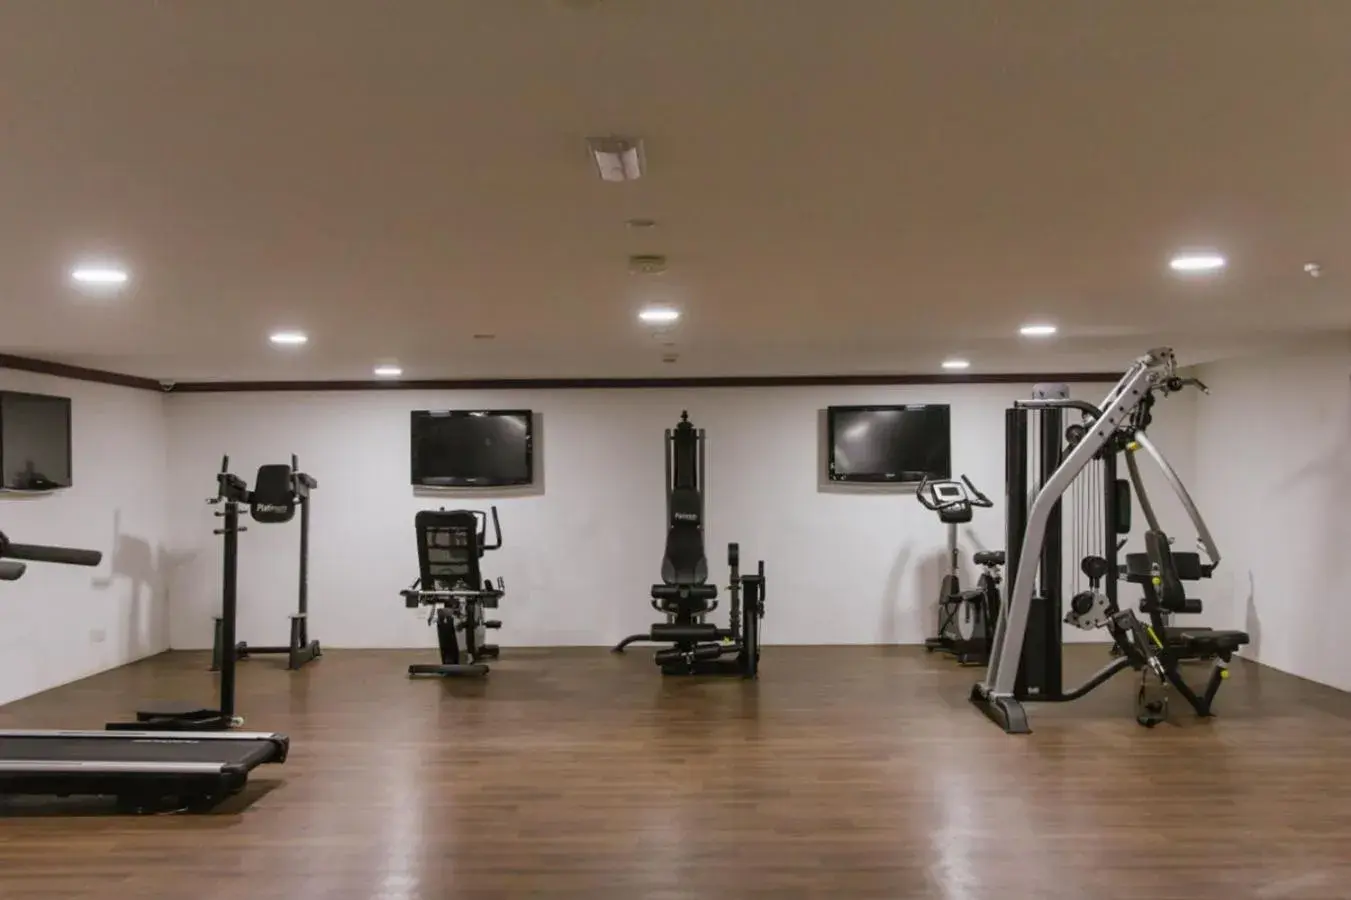 Fitness centre/facilities, Fitness Center/Facilities in Mangrove Hotel - Ras al Khaimah